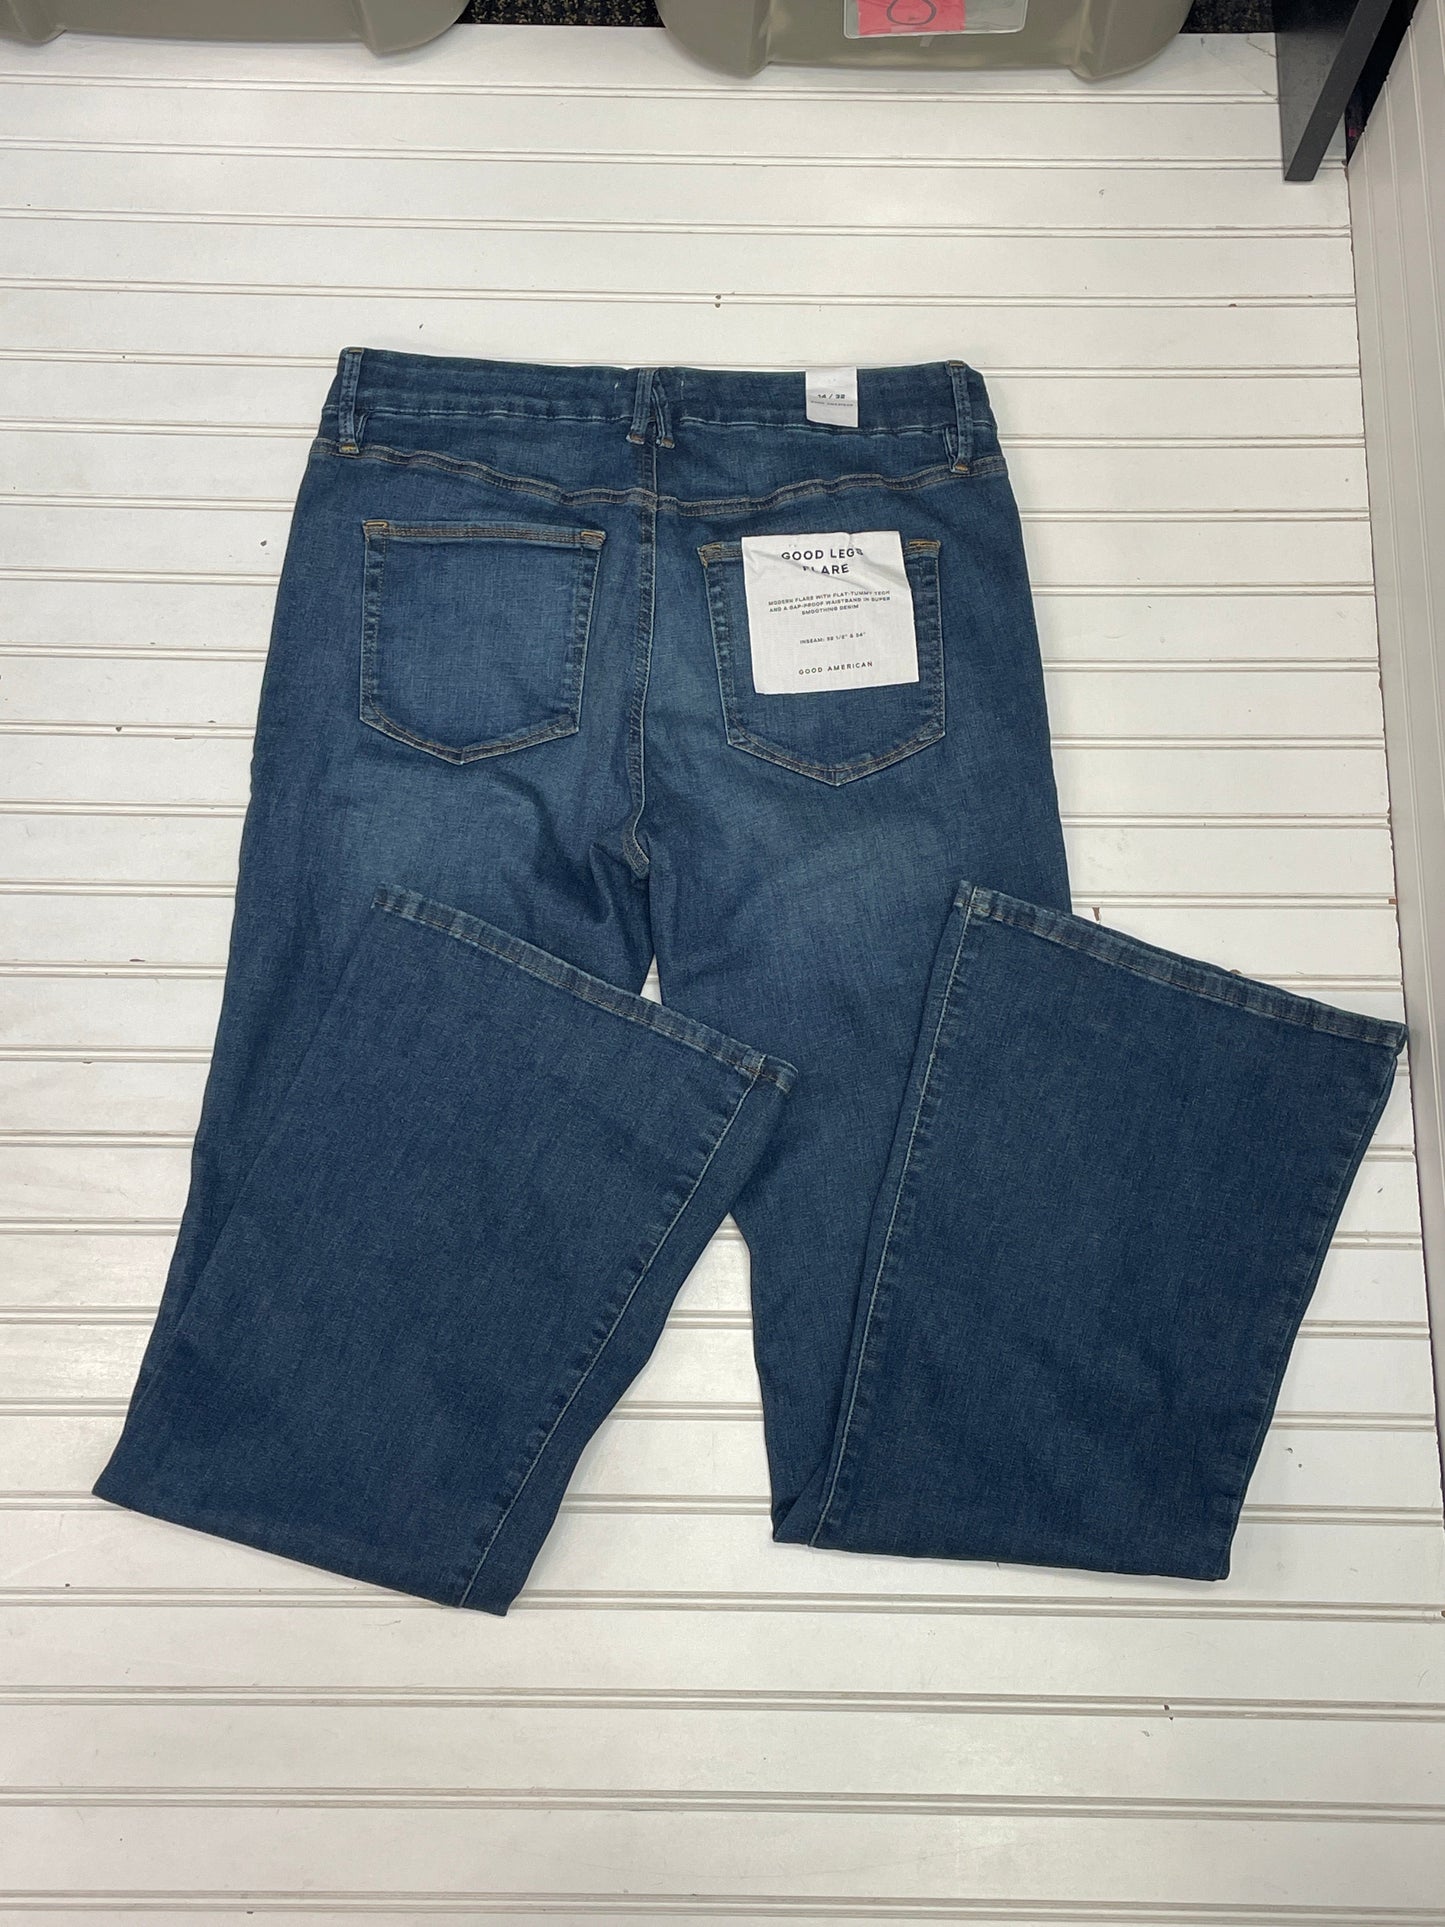 Blue Denim Jeans Flared Good American, Size 14